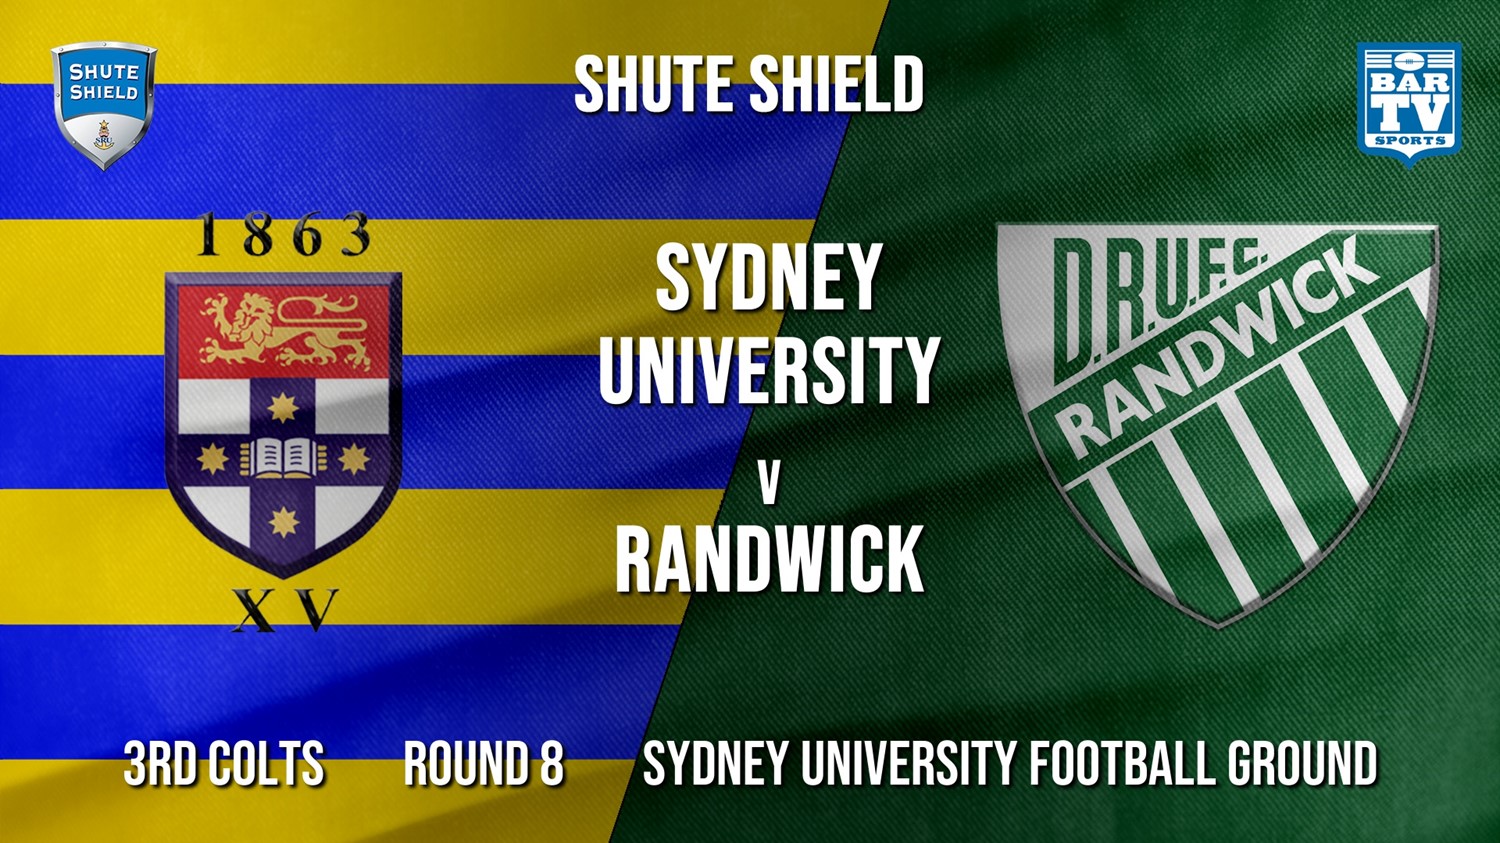 Shute Shield Round 10 - 3rd Colts - Sydney University v Randwick Minigame Slate Image